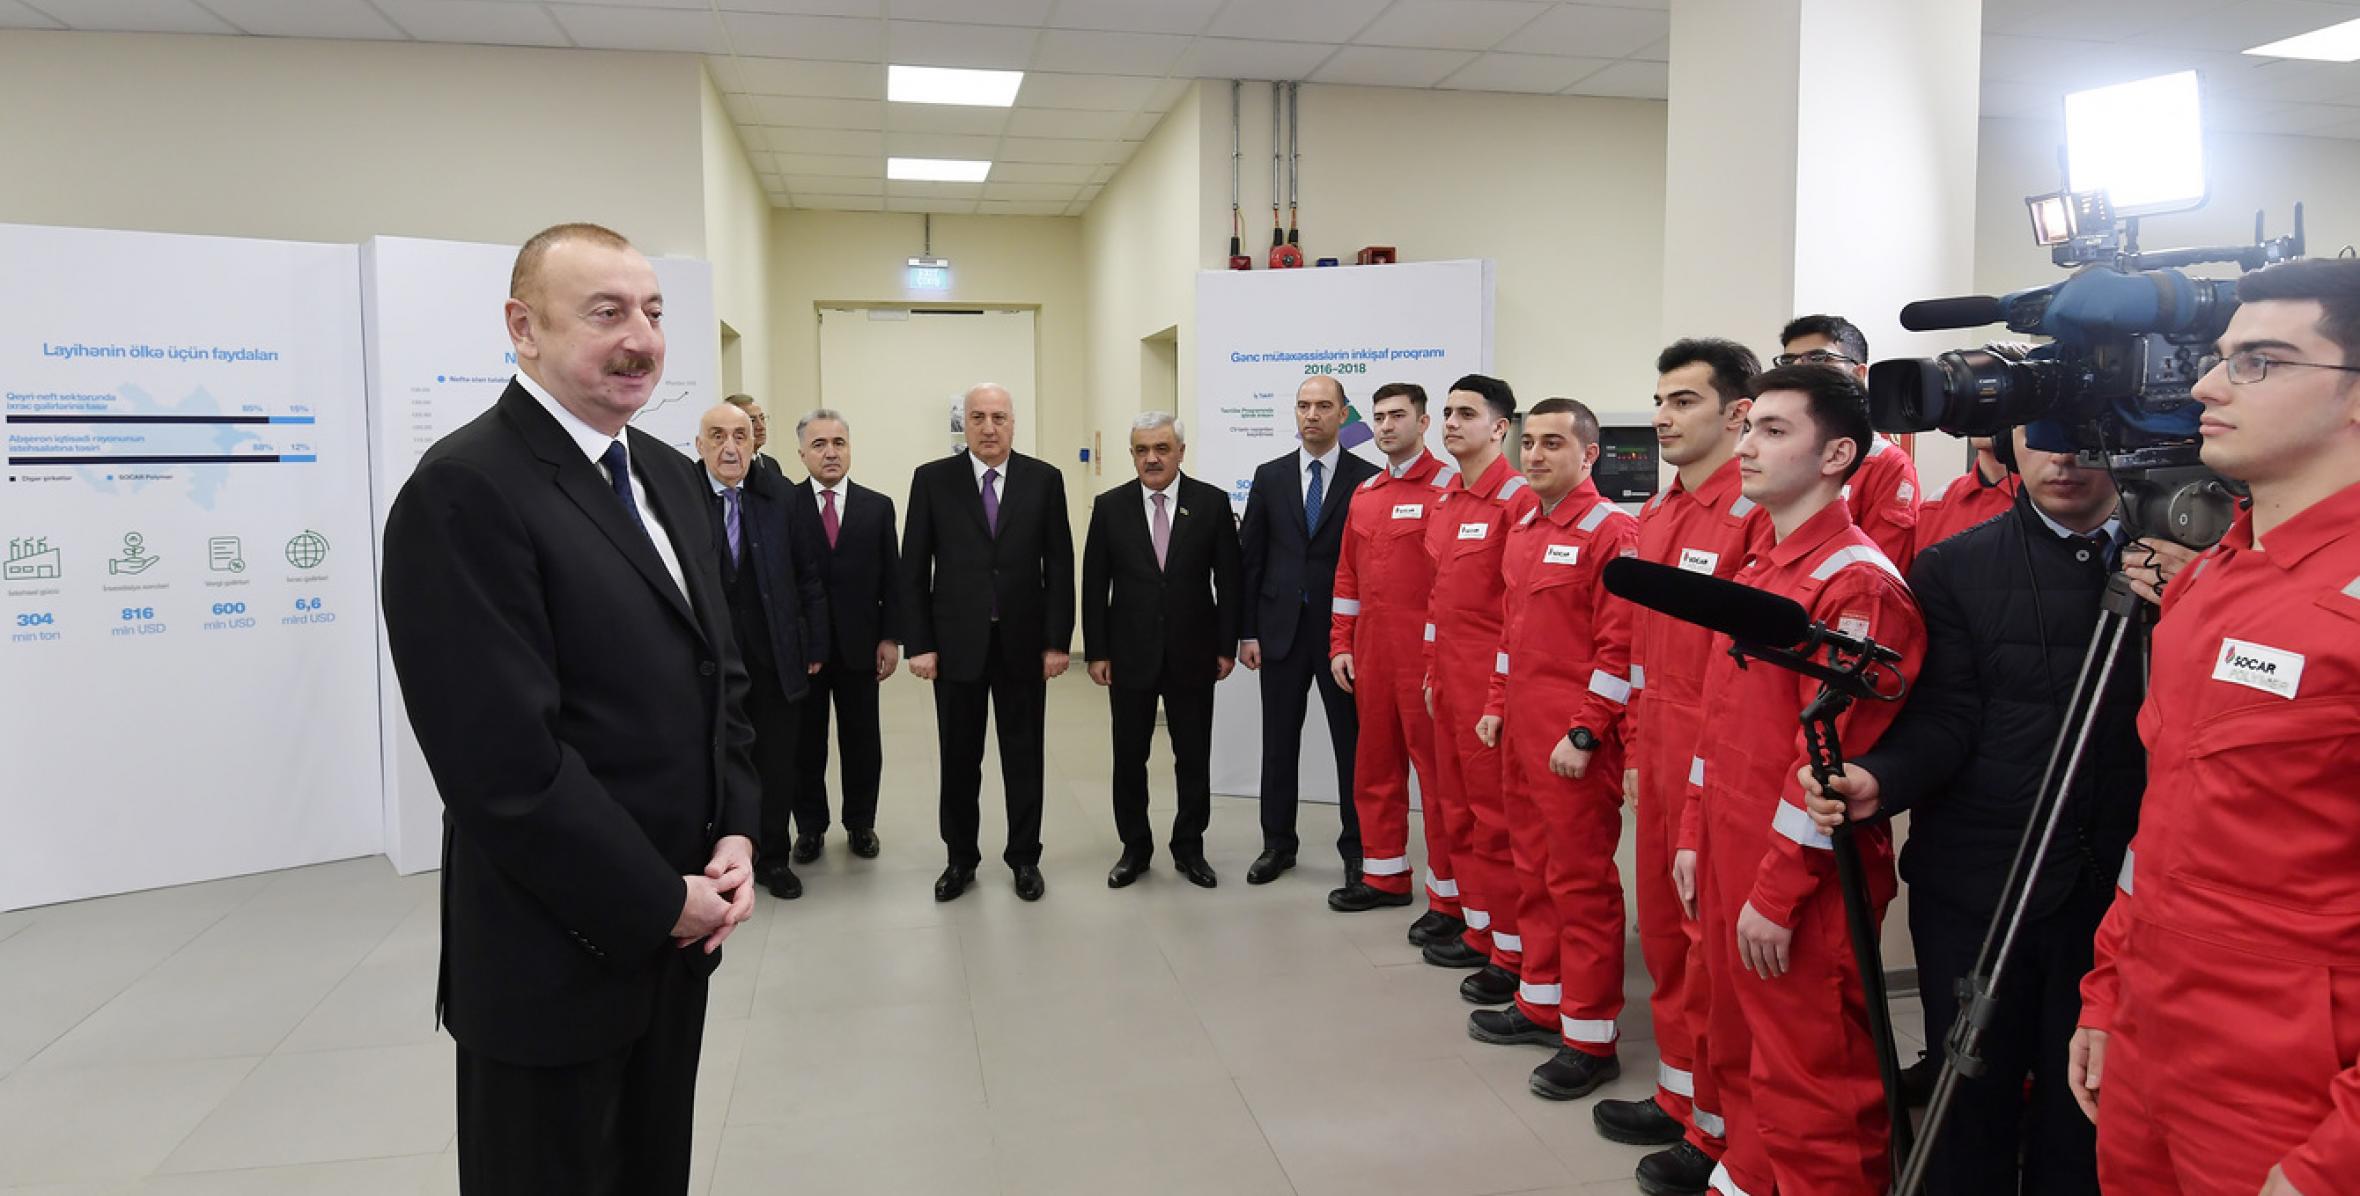 Speech by Ilham Aliyev at the opening of SOCAR Polymer’s High Density Polyethylene Plant in Sumgayit